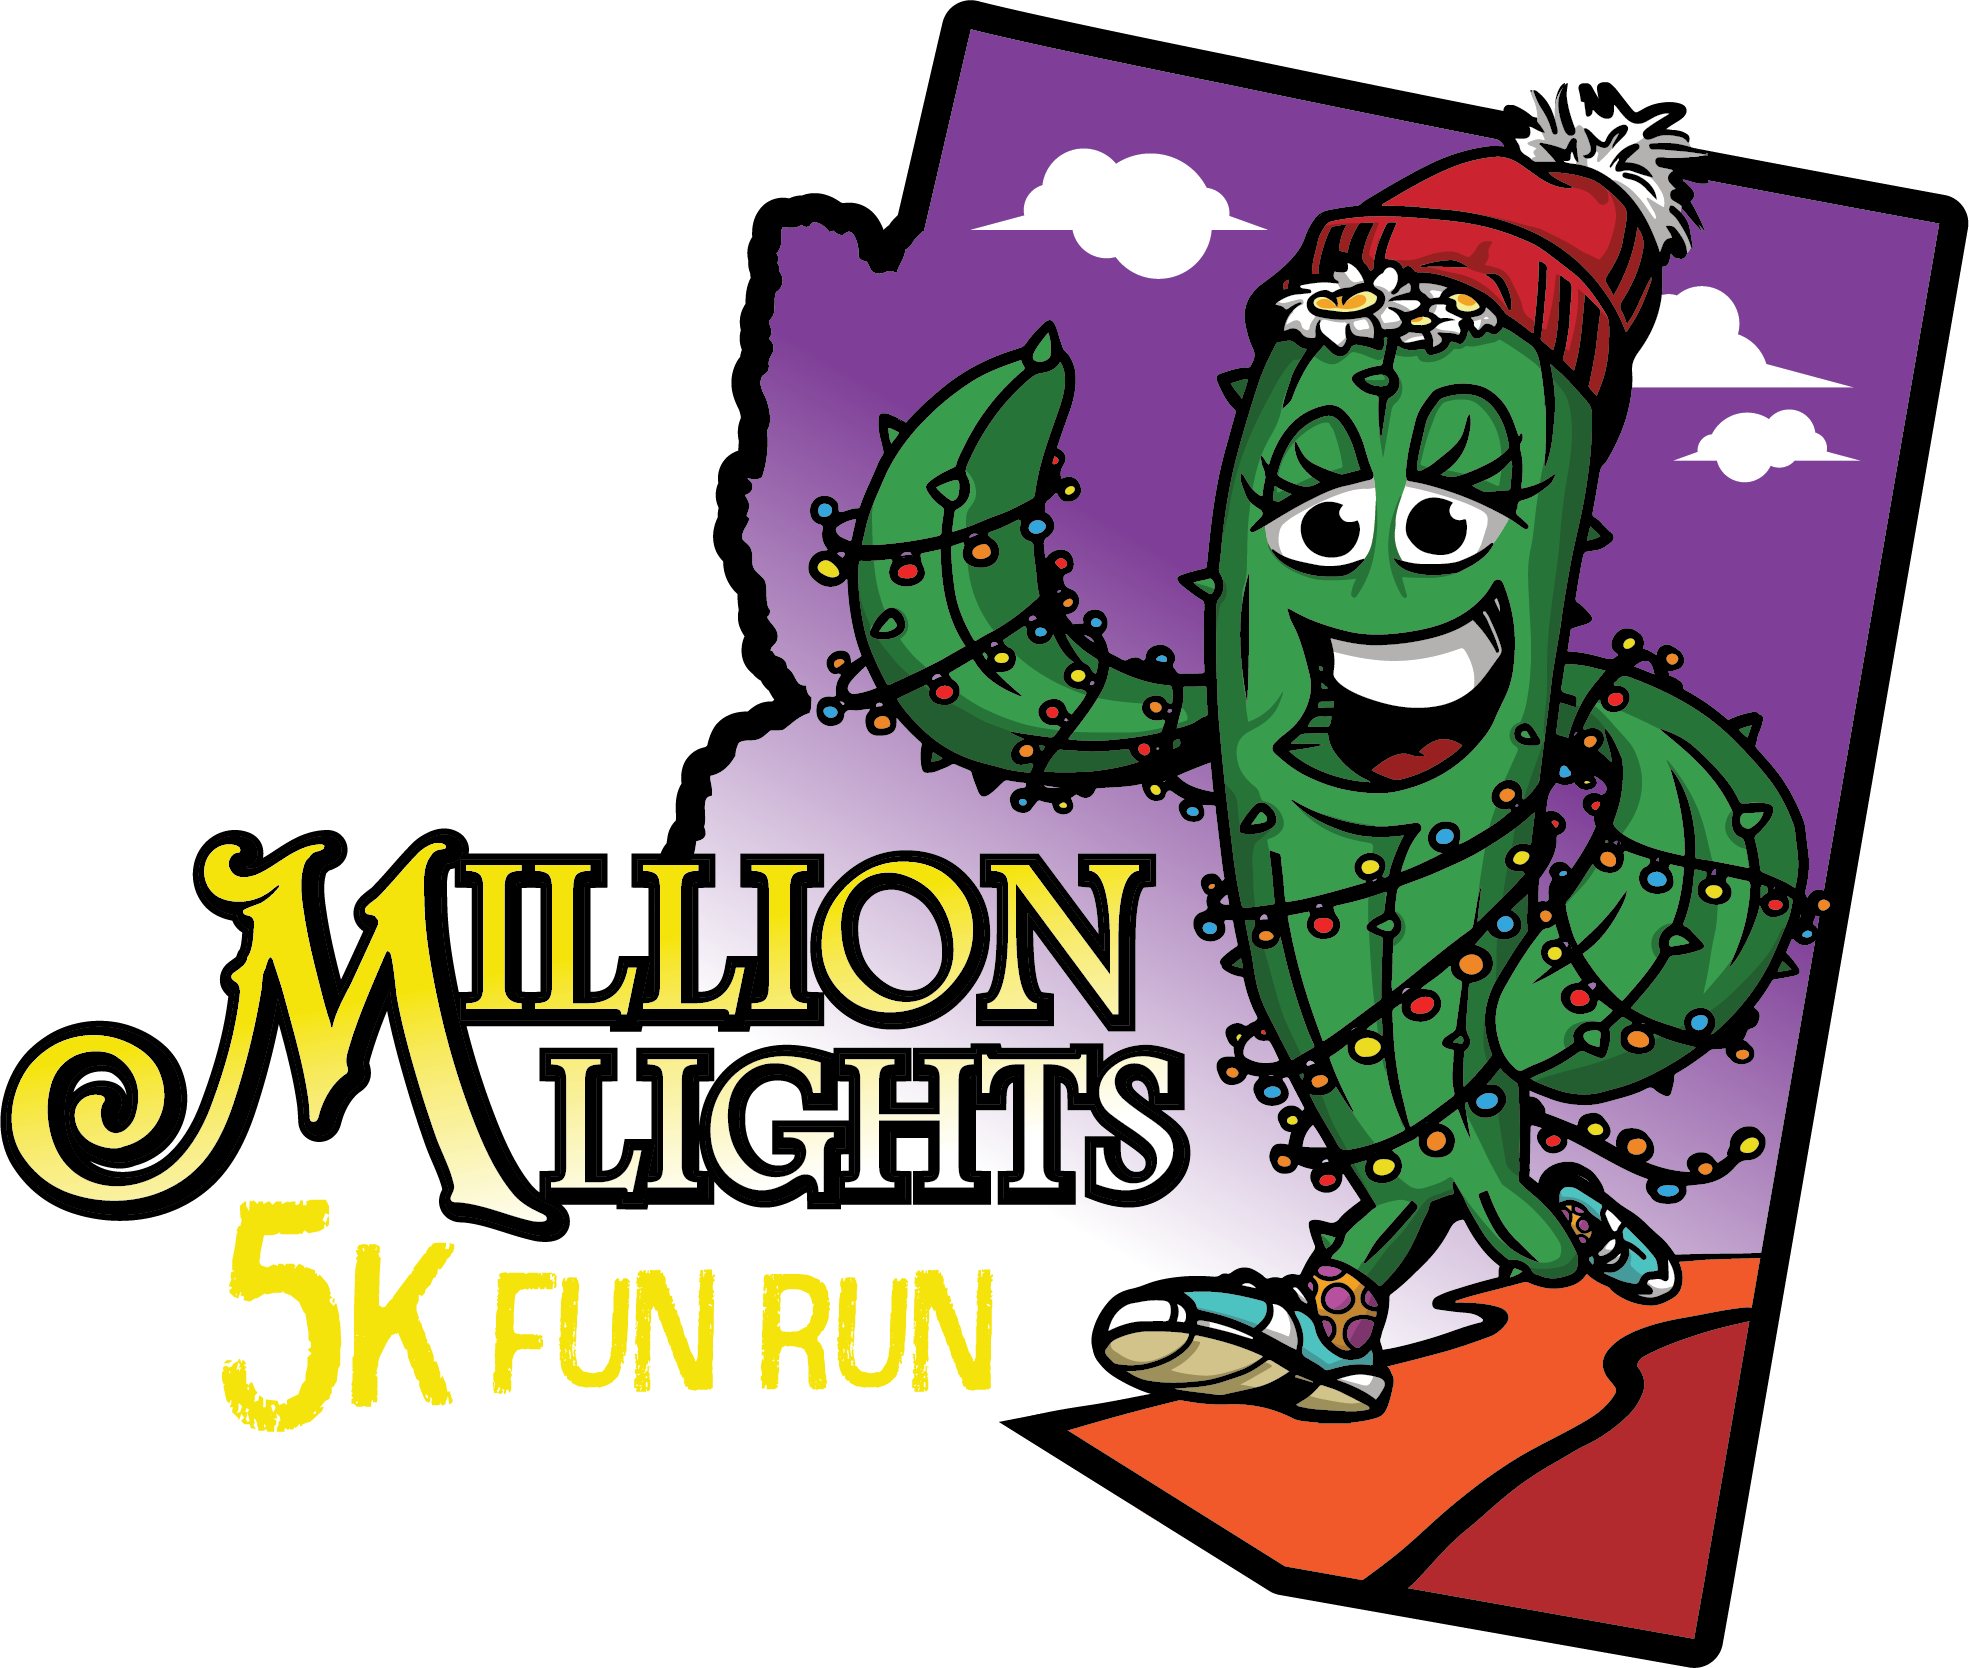 Million Lights 5k Run in Phoenix, AZ Details, Registration, and